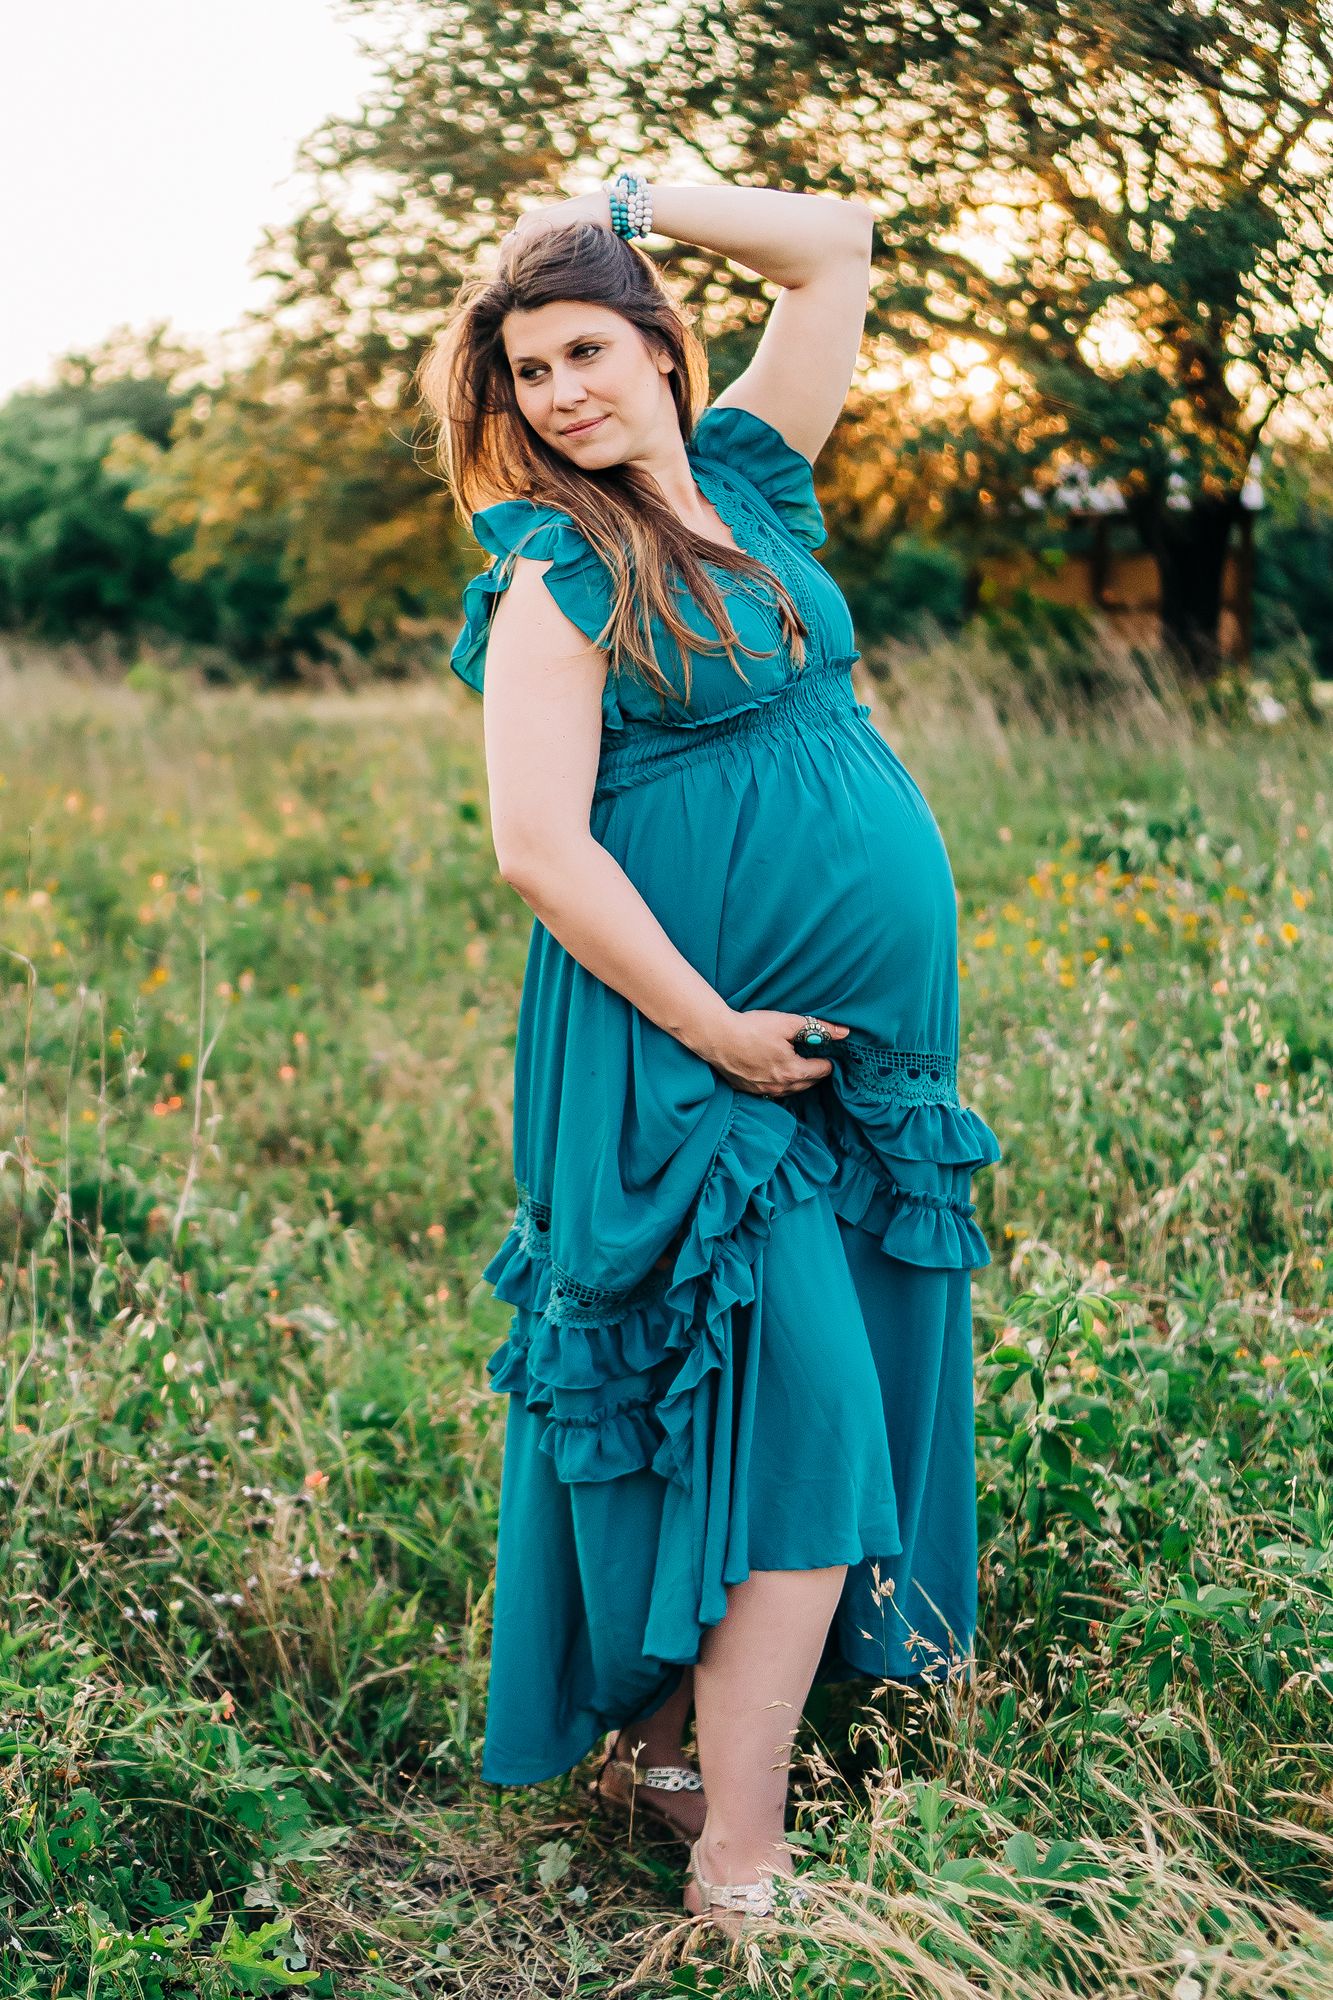 How to pose for maternity photos | Family Maternity Session | Dallas, Texas Photographer | via brittnierenee.com